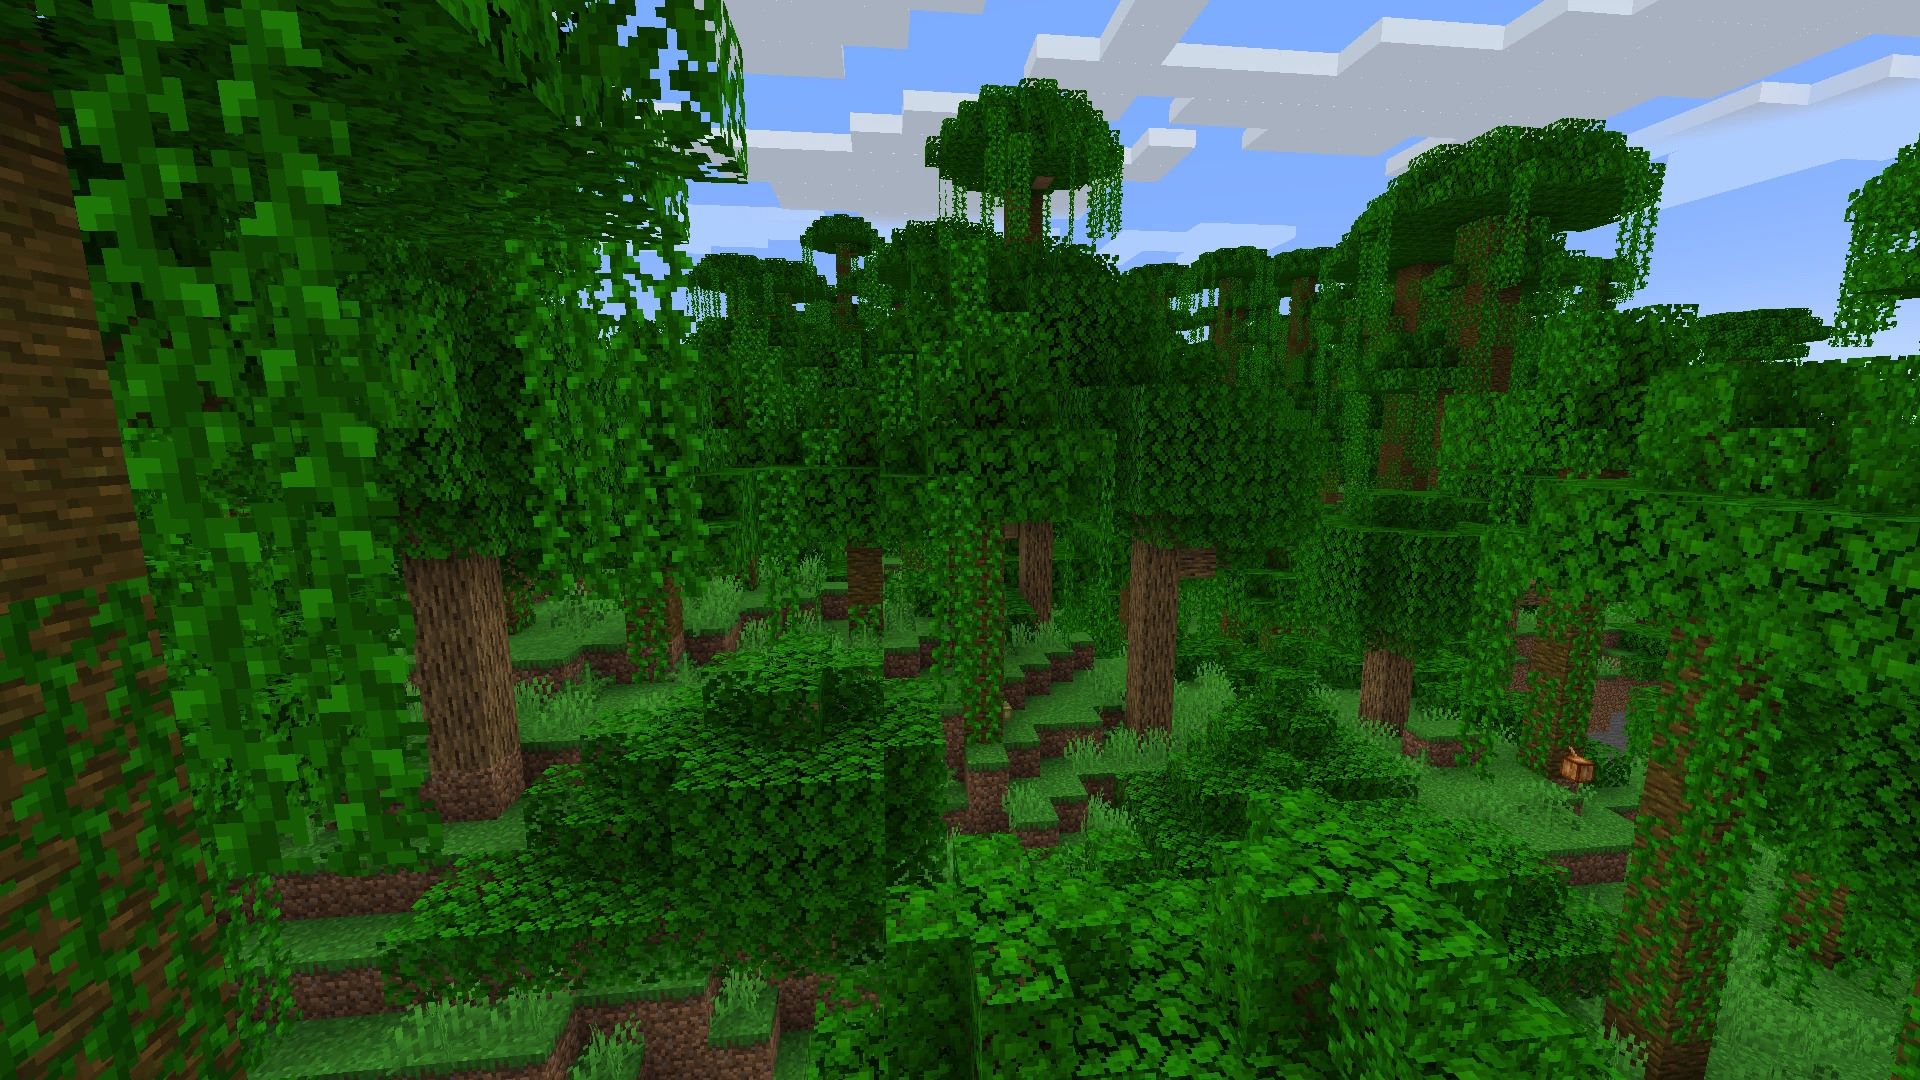 Minecraft Biomes Explained: Jungle Biome